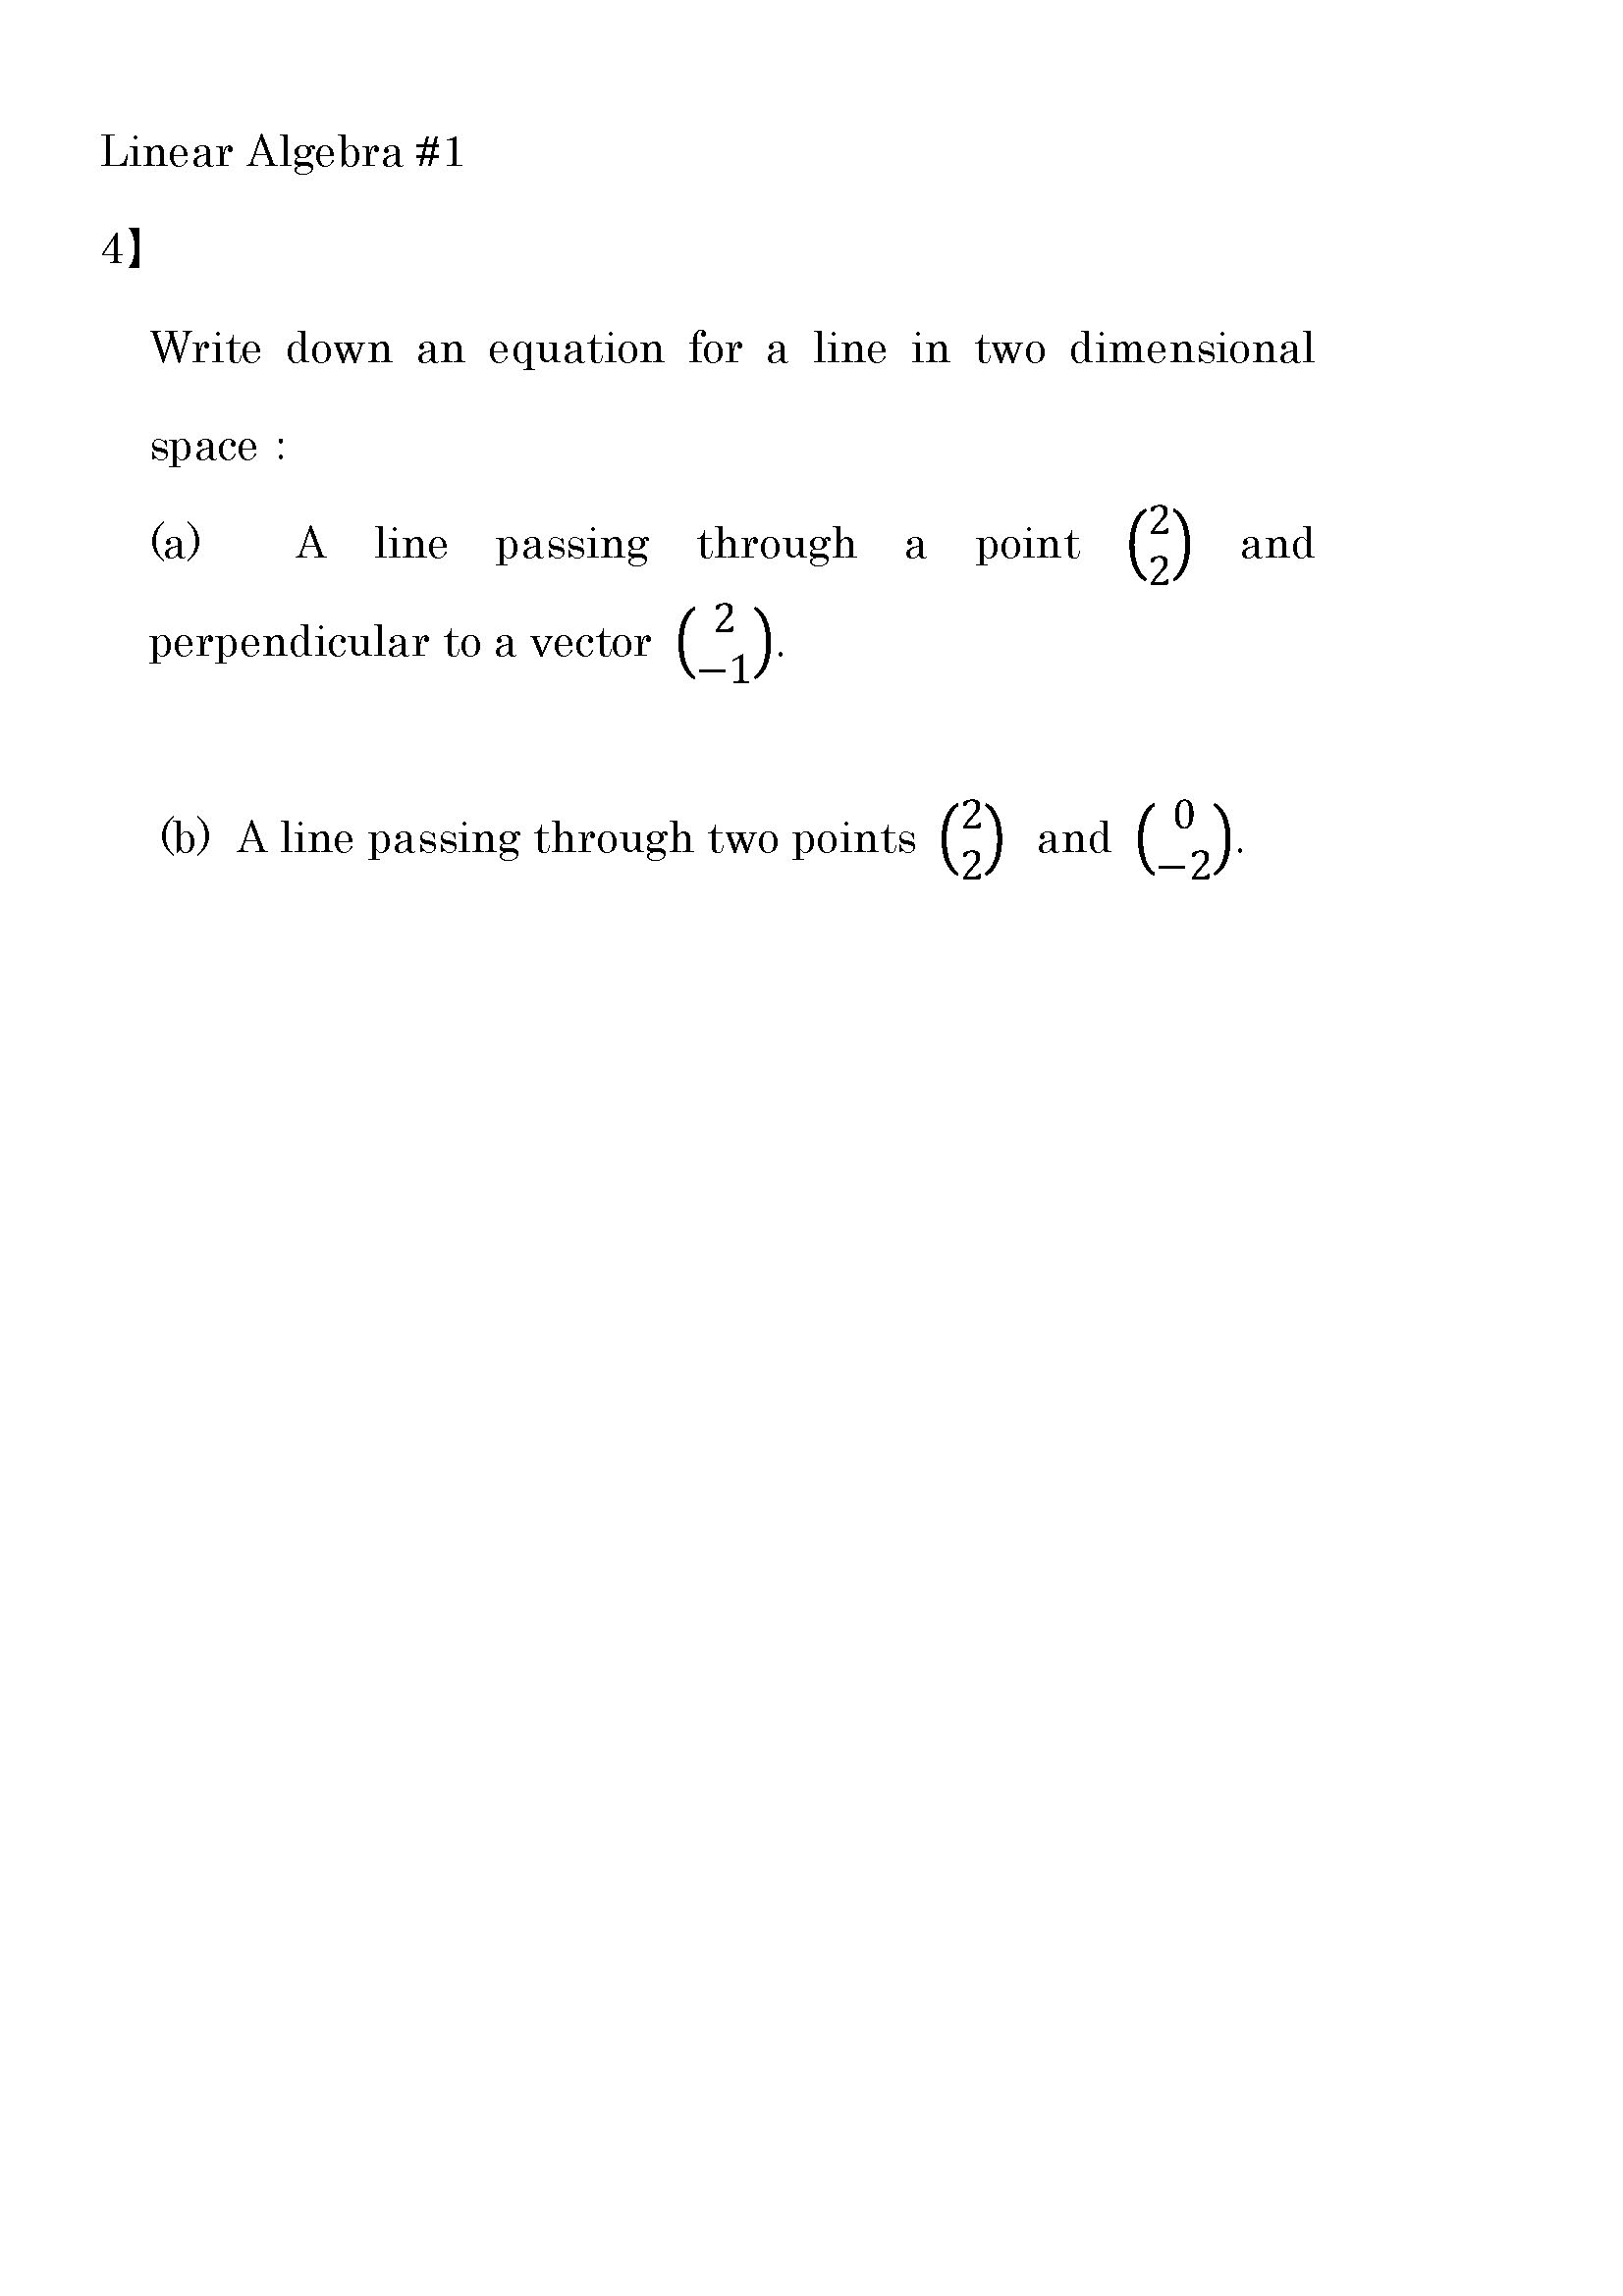 Linear_Algebra_Quiz_1-4-tate.jpg